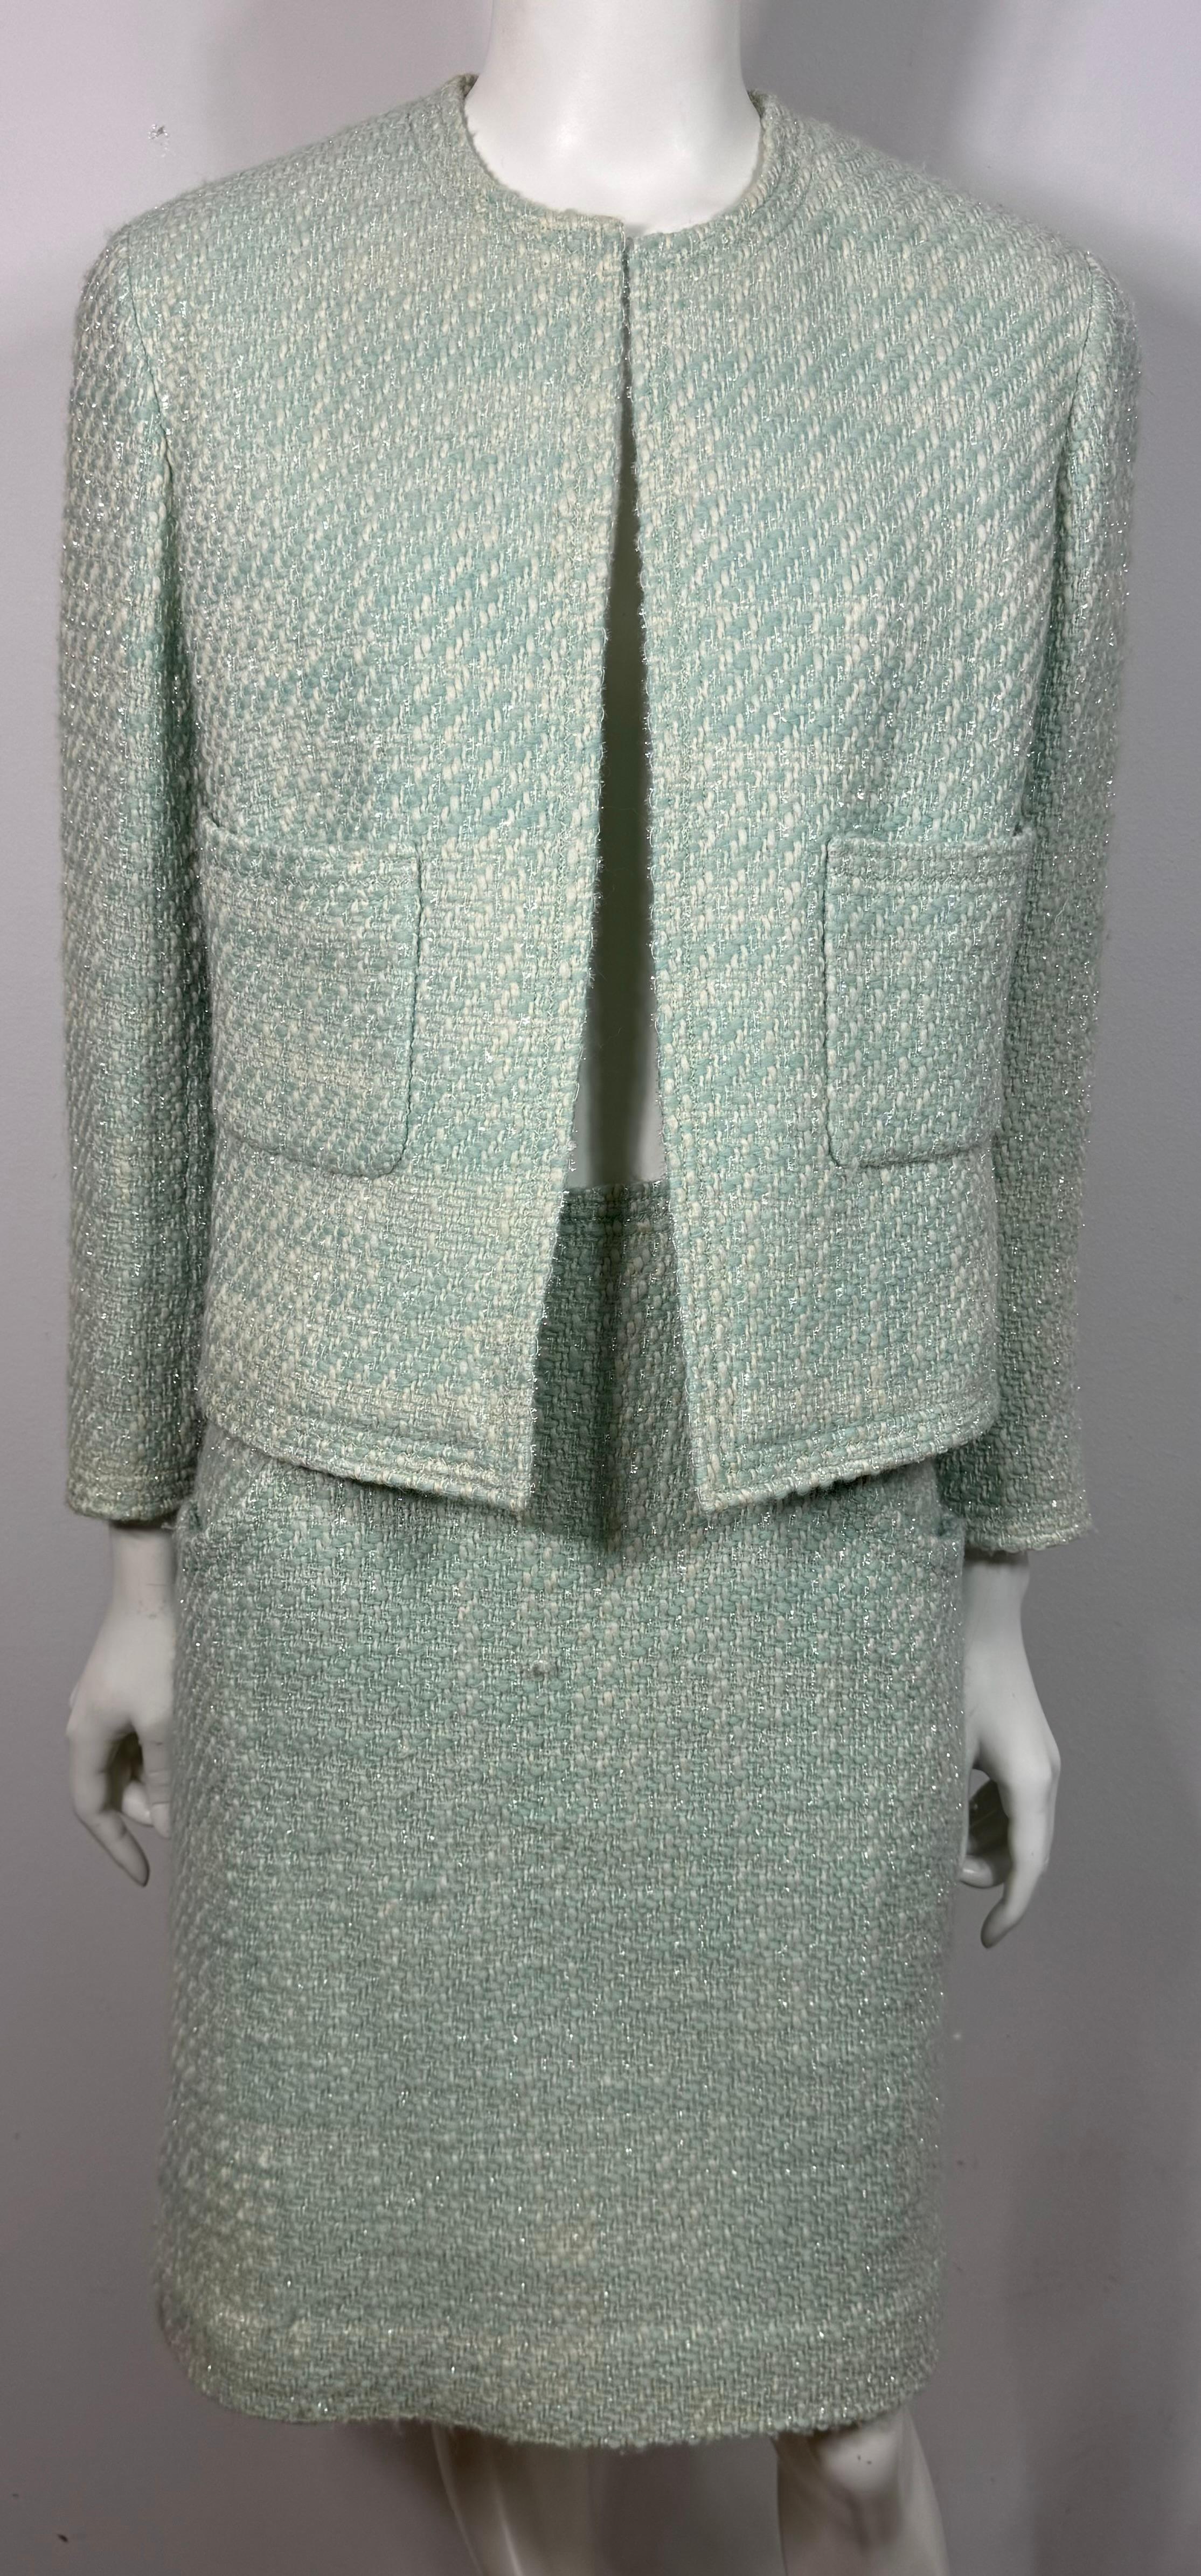 Chanel Boutique Runway printemps 1992 - Veste en tweed ivoire et turq en vente 10